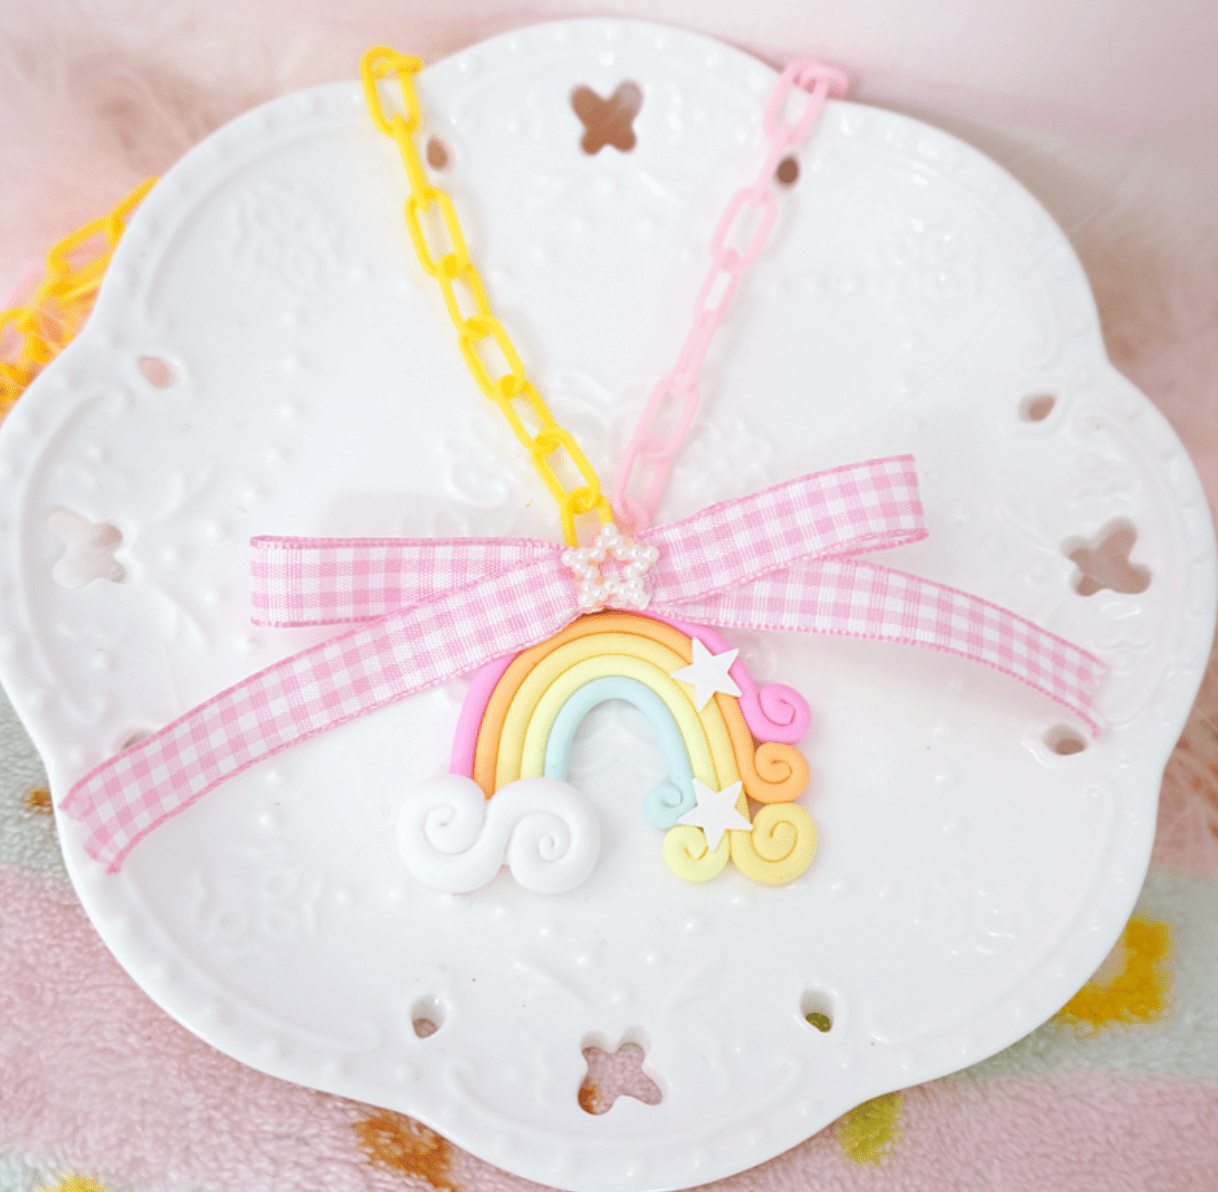 Taobao Rainbow Ribbon Necklace Kawaii Gifts 09446358